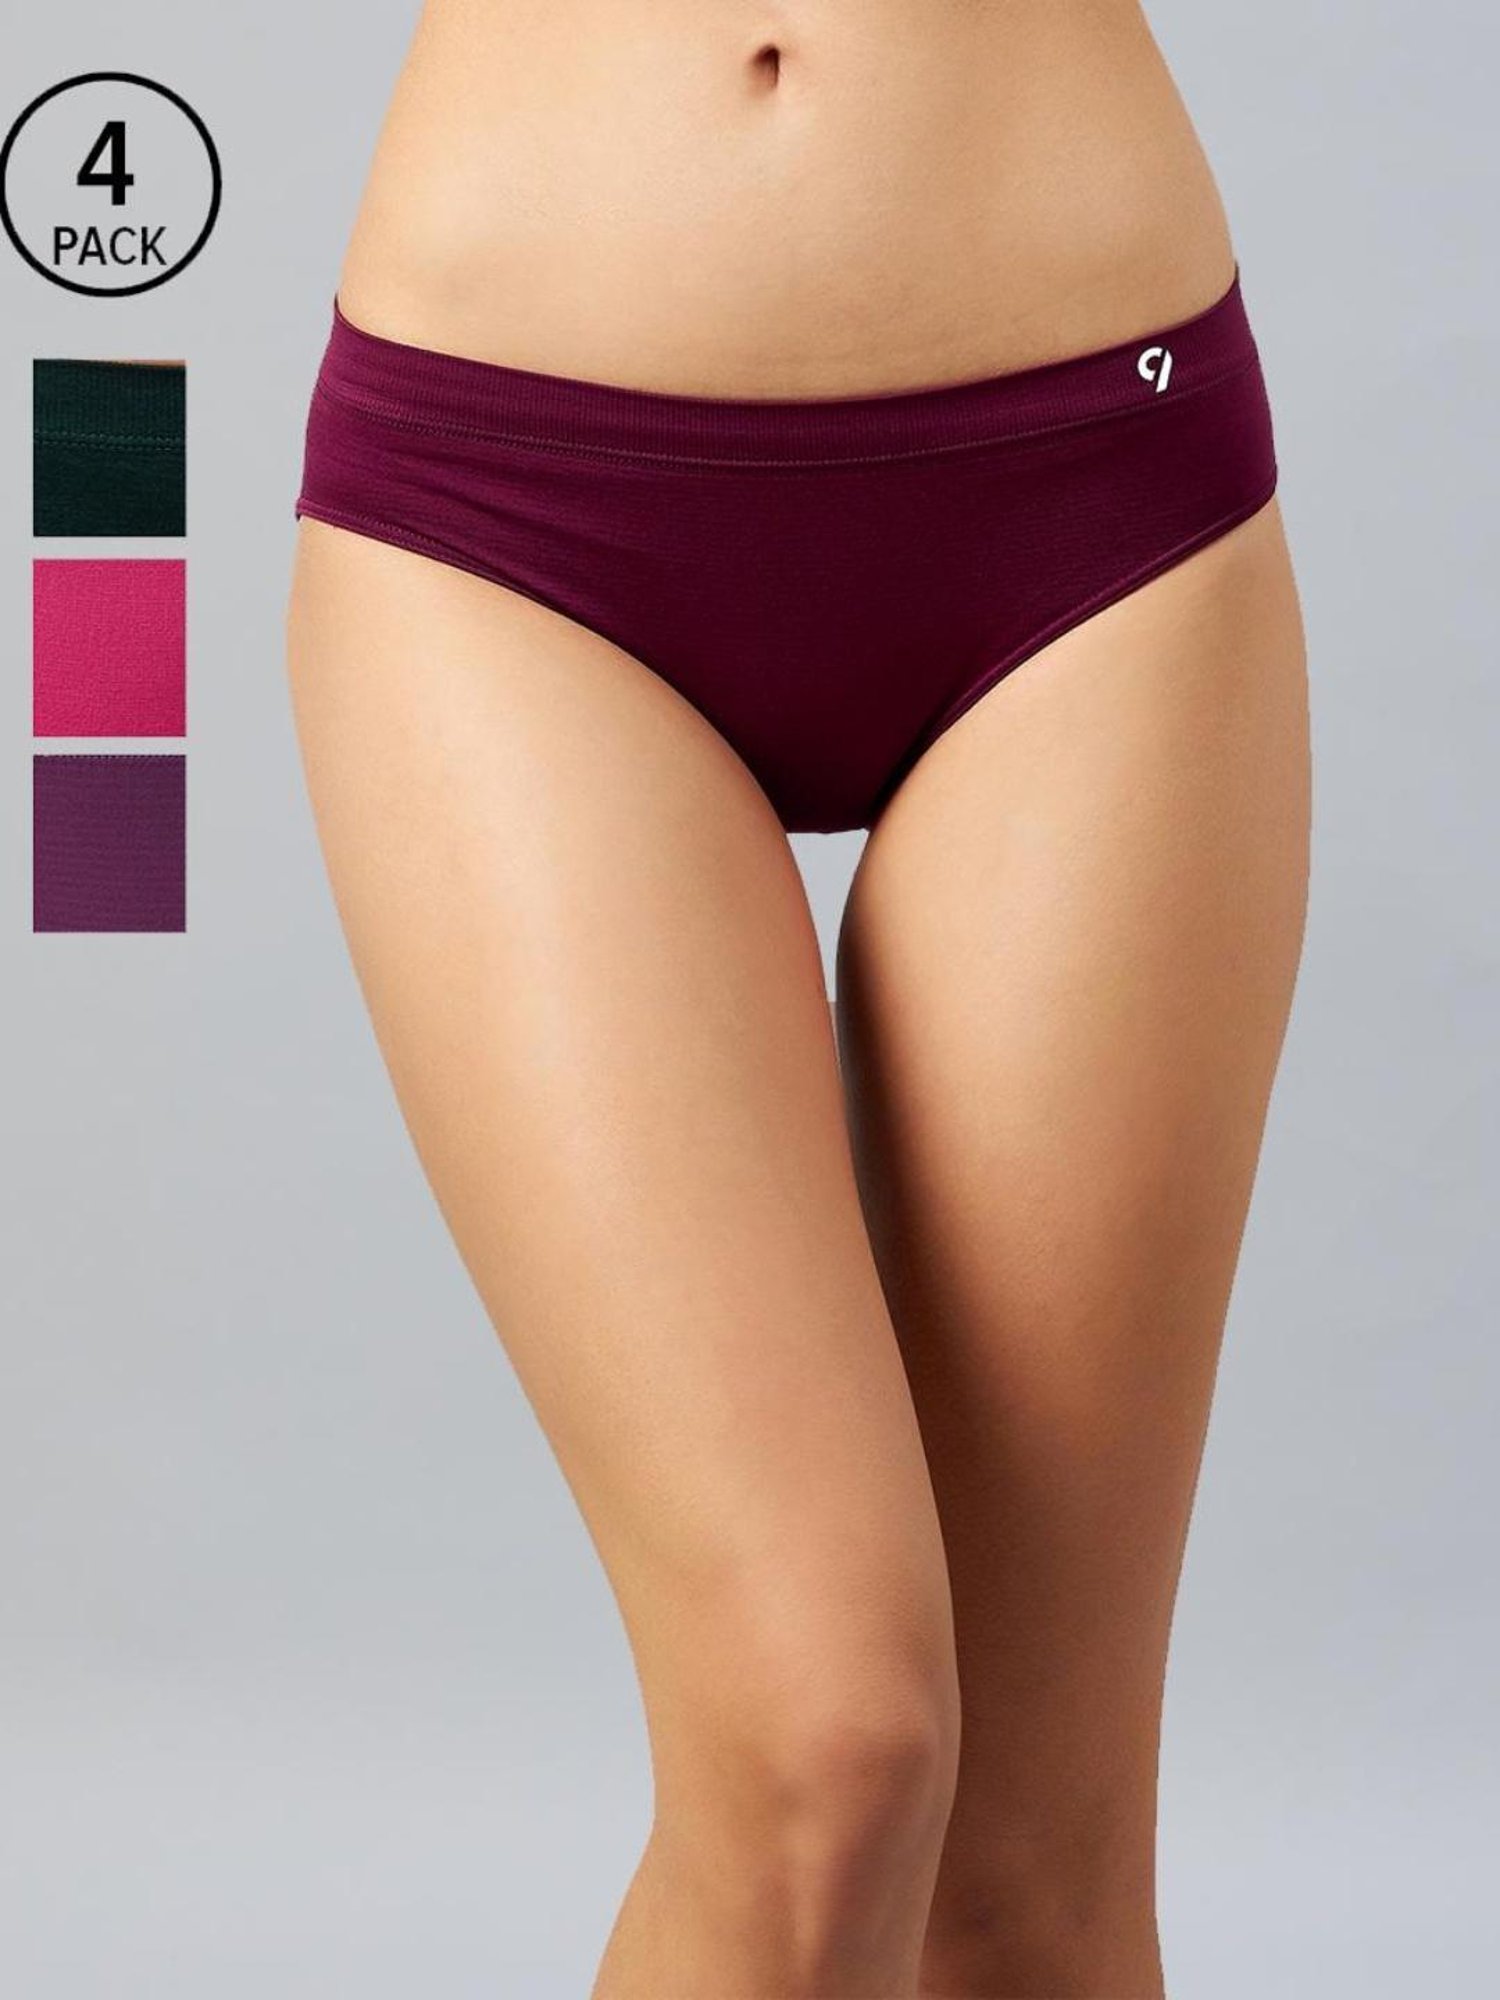 Buy C9 Airwear Lingerie Panty For Women Pack Of 3 - Multi-Color Online